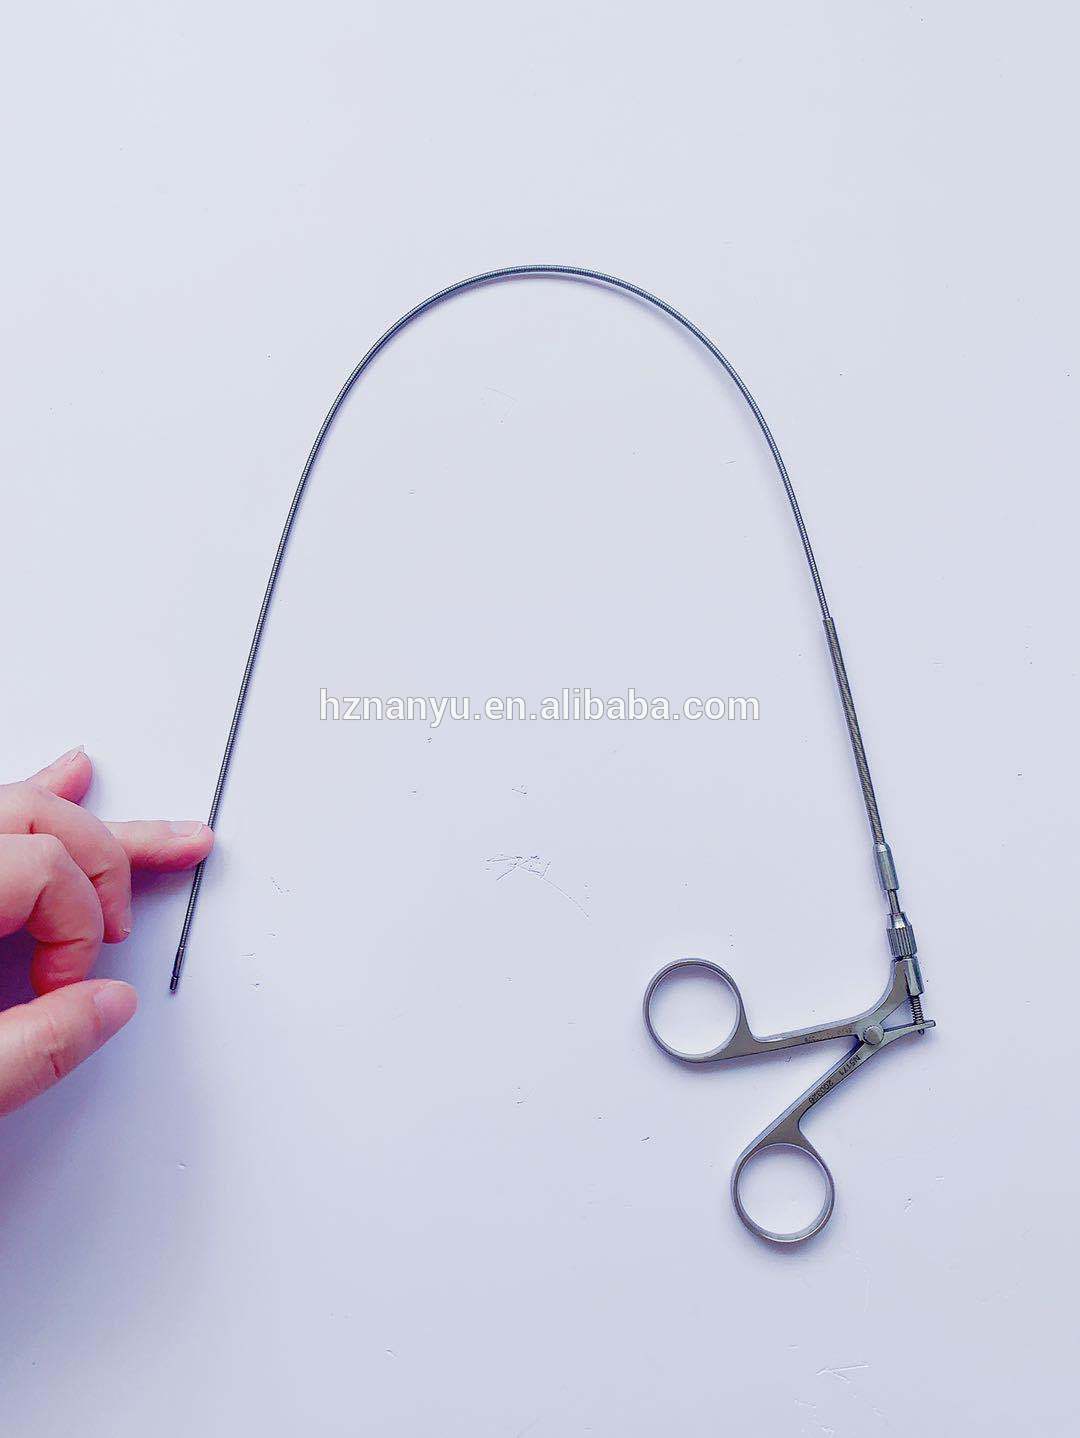 Nanyu Hysteroscopy Instruments set Gynecology instruments Surgical Medical equipment